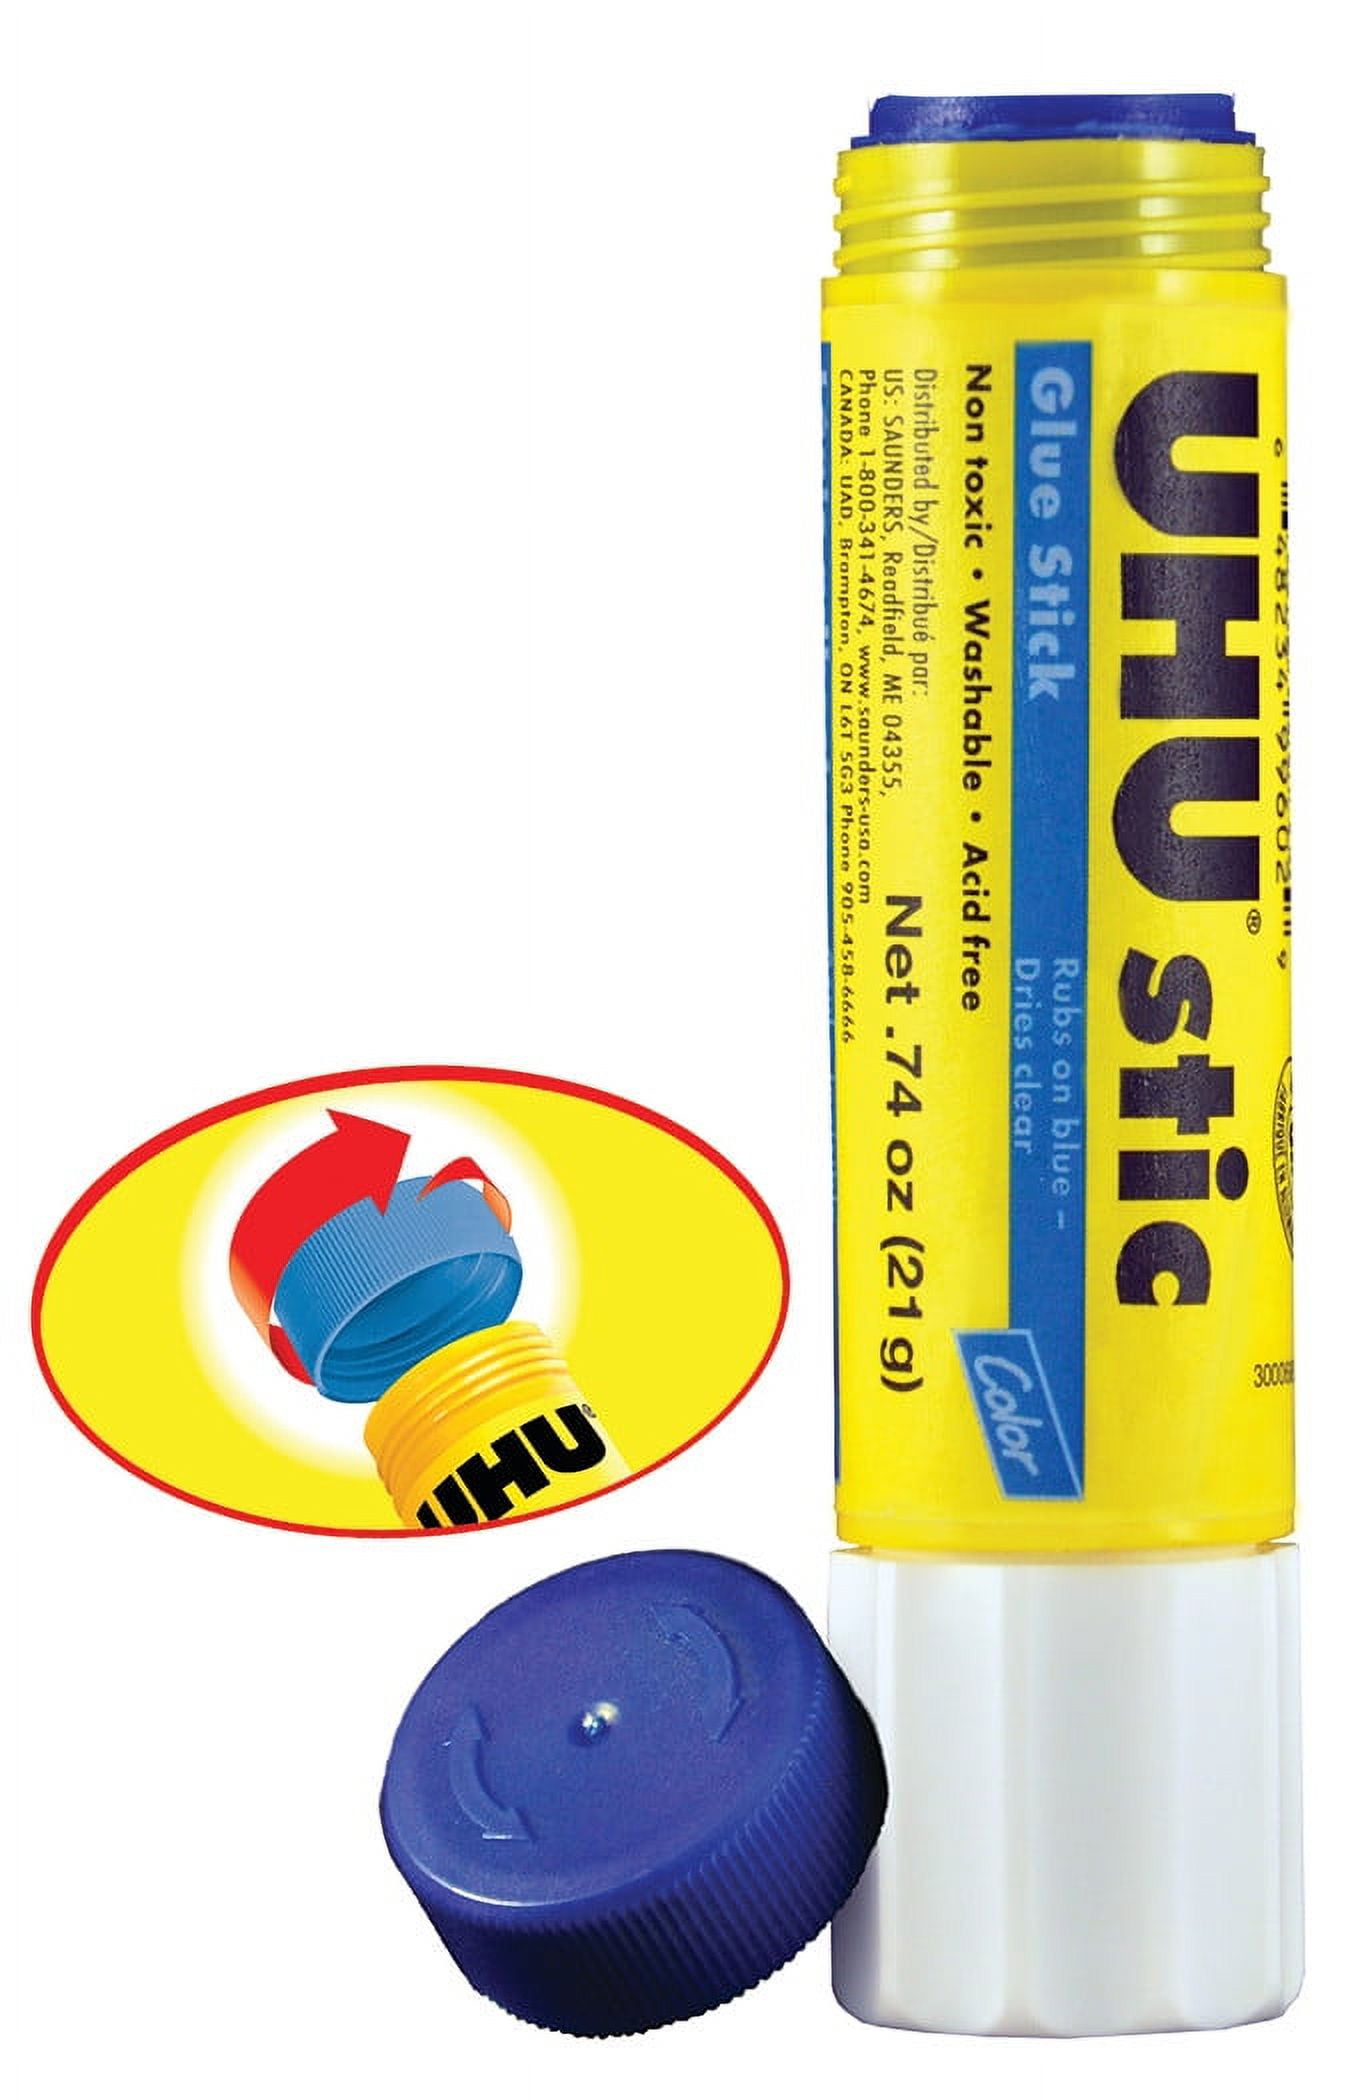 Stick glue Adhesive By Unifix SWG